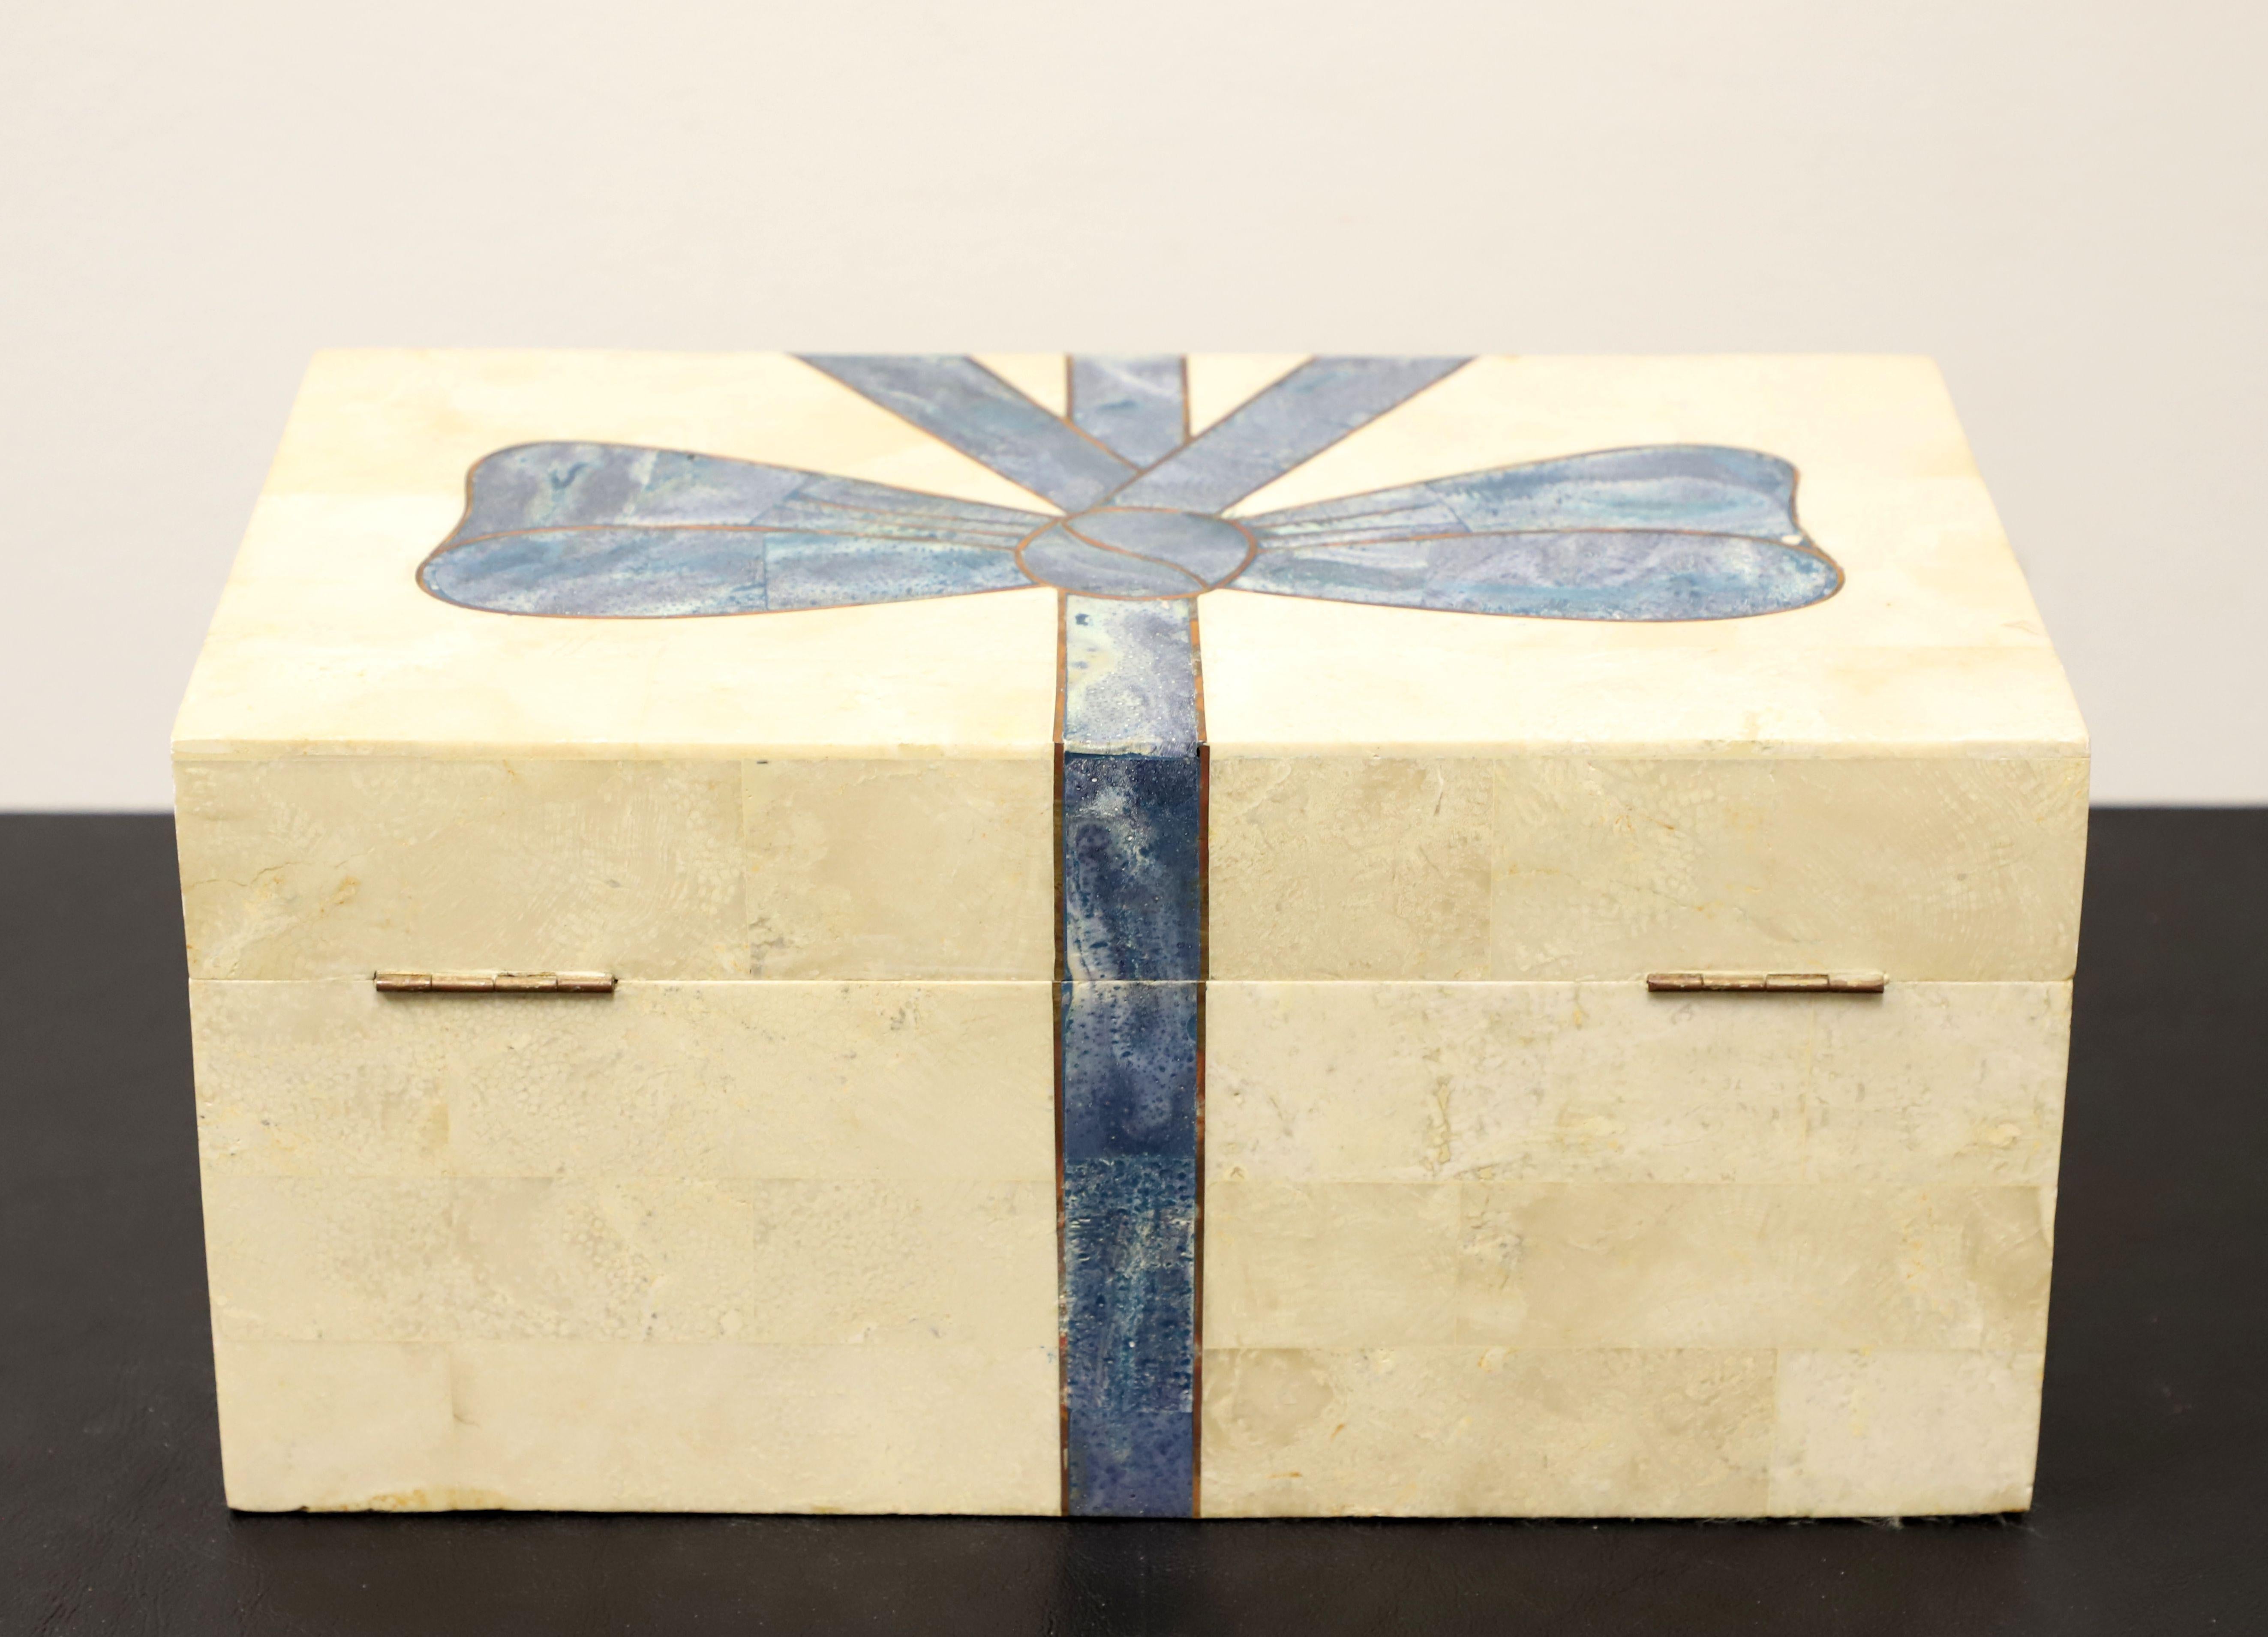 Philippin Boîte à bibelots en marbre tessellé avec nœud bleu